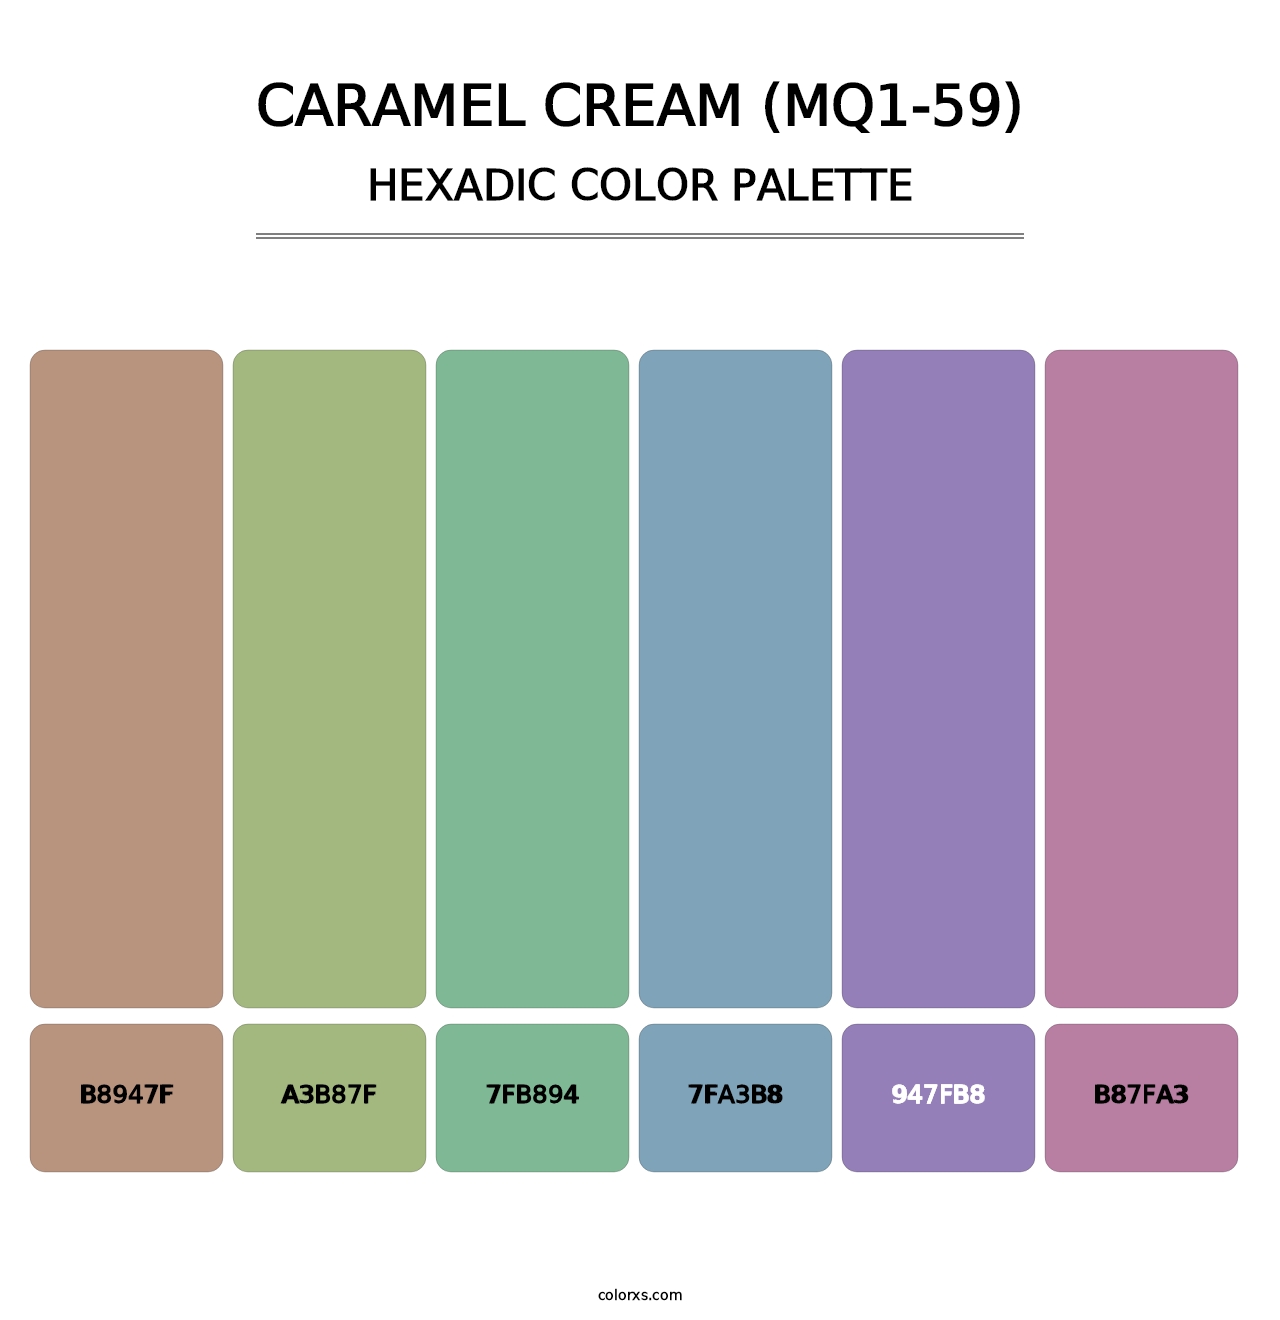 Caramel Cream (MQ1-59) - Hexadic Color Palette